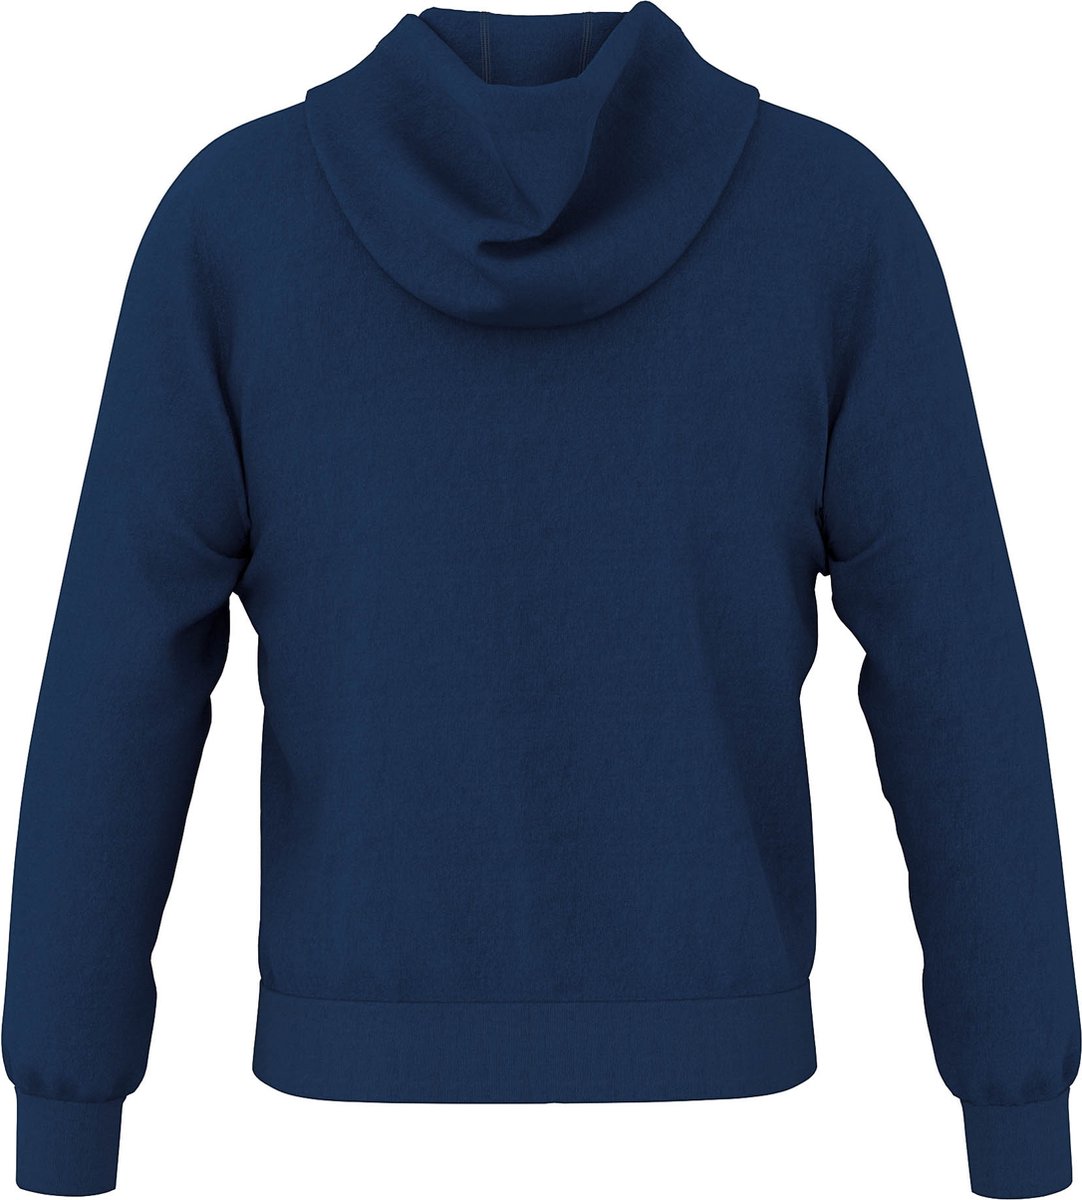 Errea Warren 3.0 Ad Blauw Sweatshirt - Sportwear - Volwassen